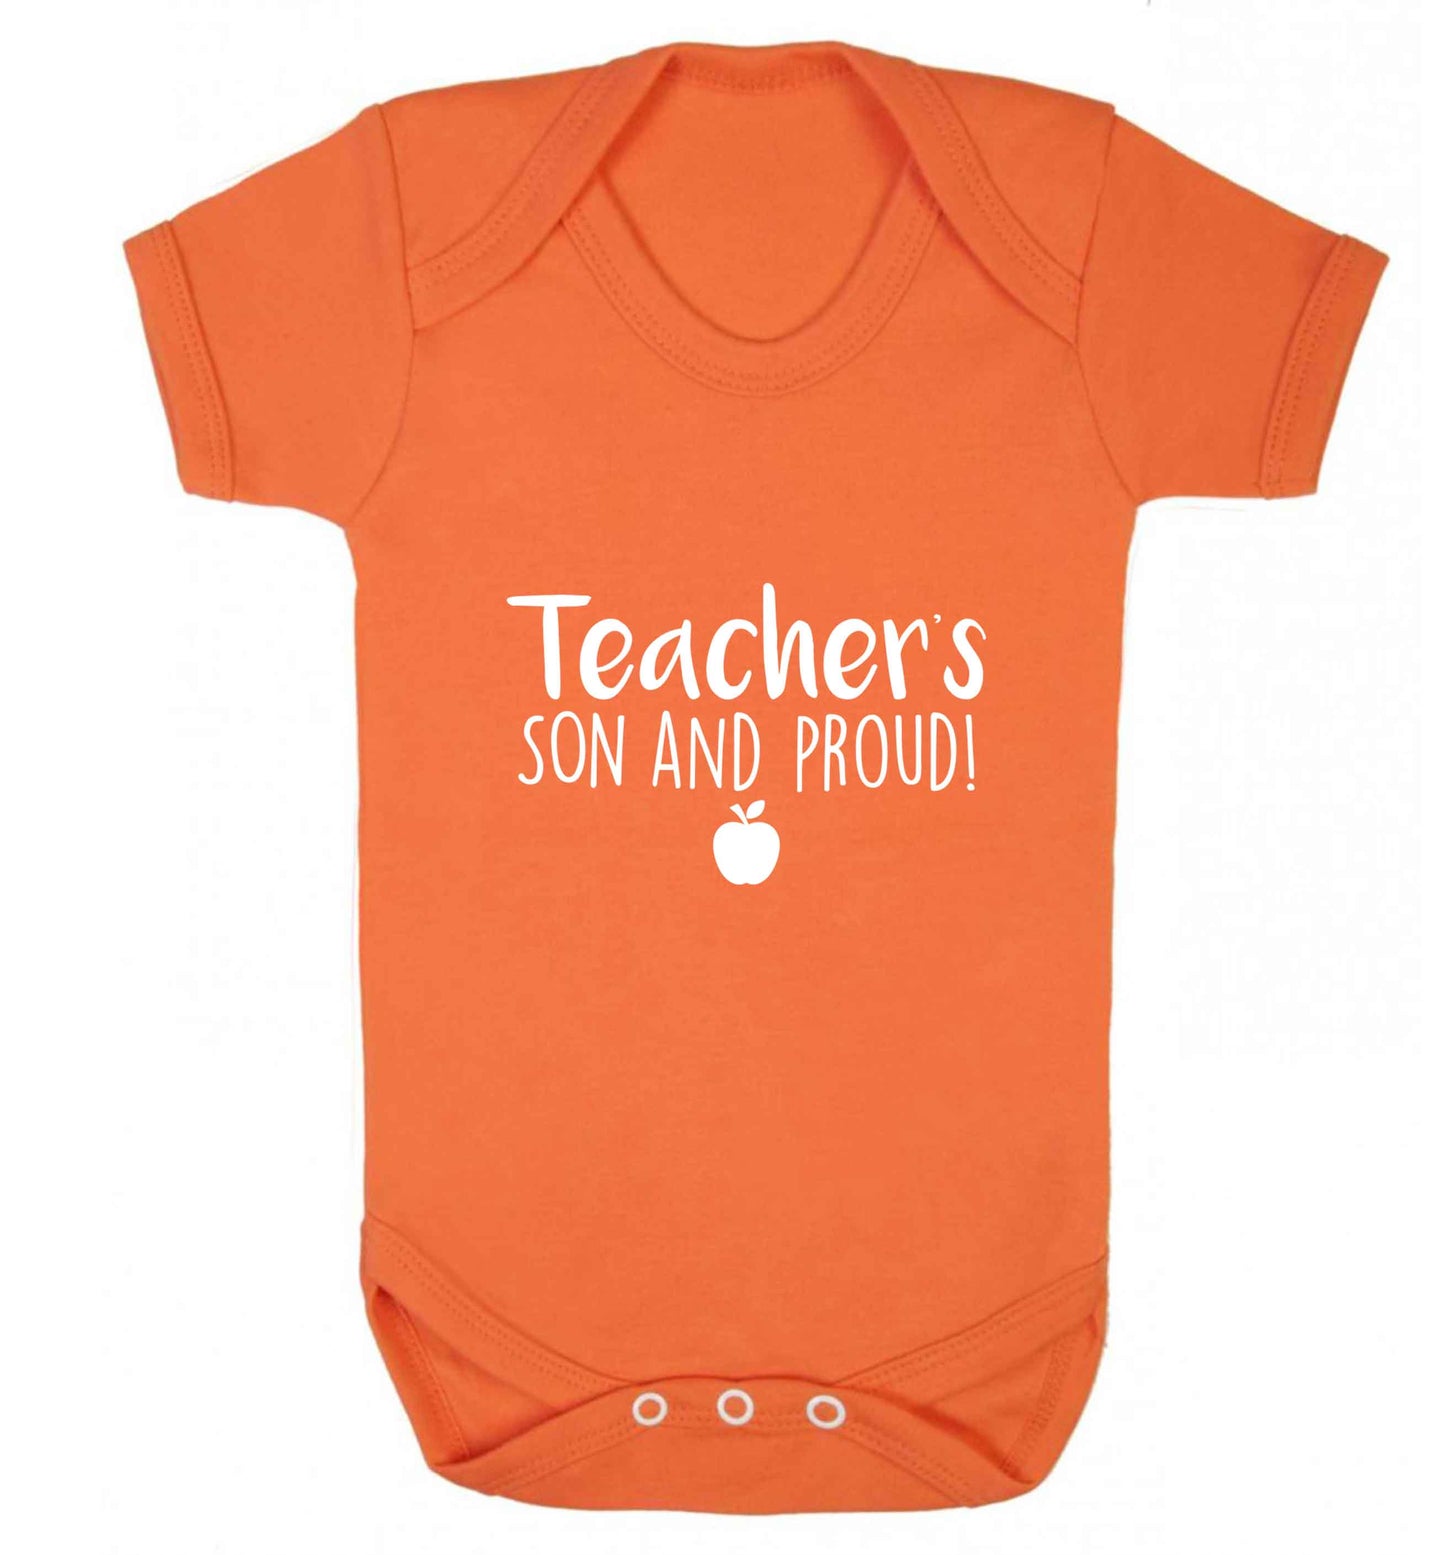 Teachers son and proud baby vest orange 18-24 months